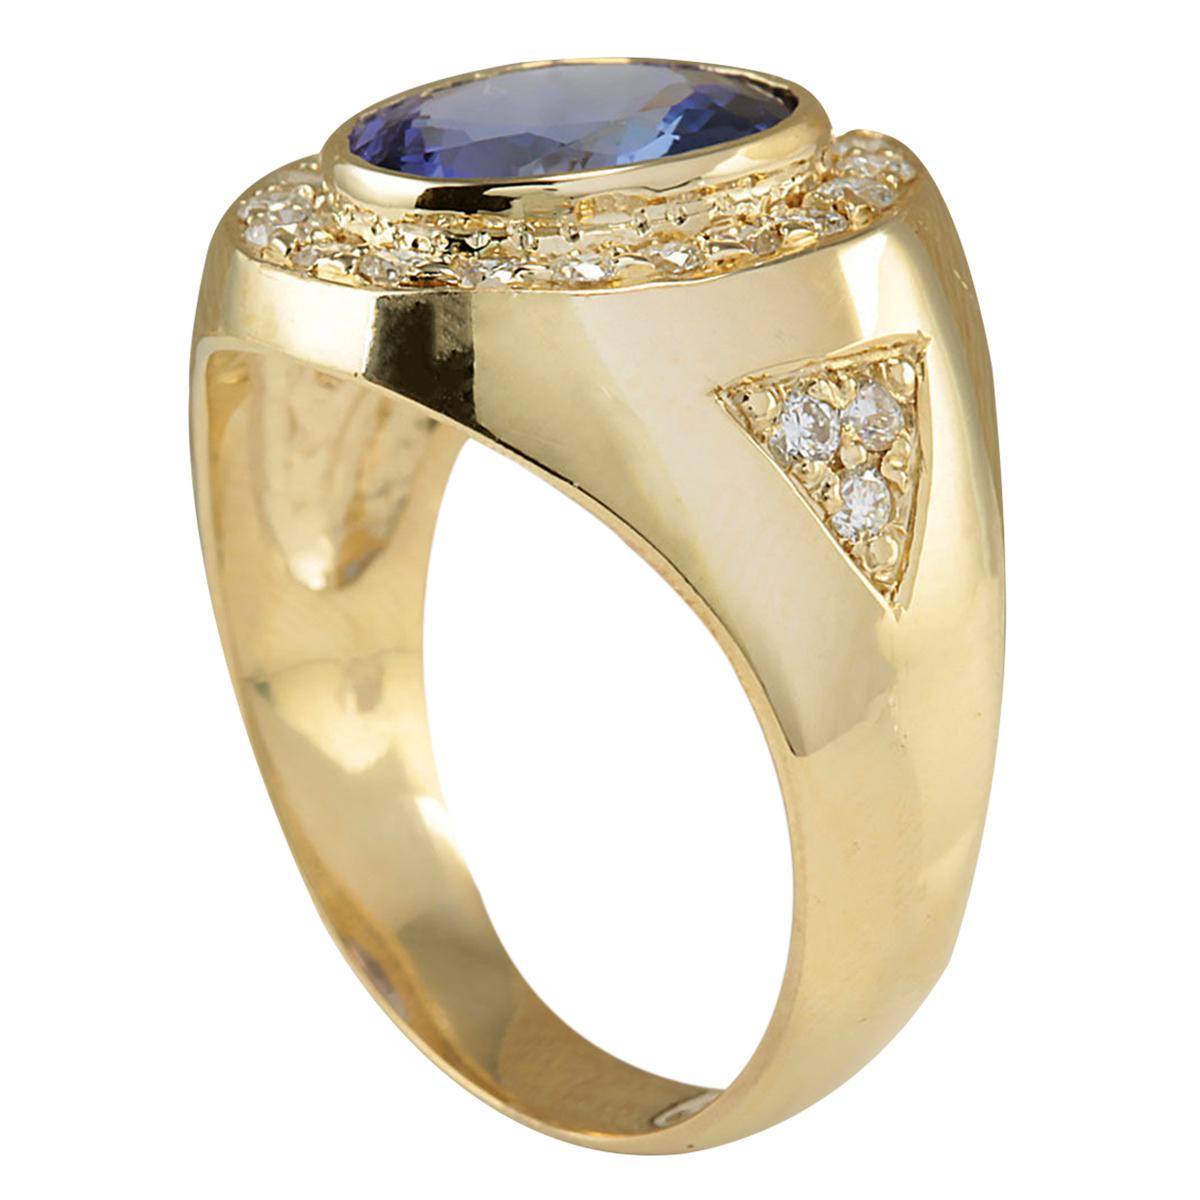 Oval Cut Natural Tanzanite Diamond Ring In 14 Karat Yellow Gold  For Sale